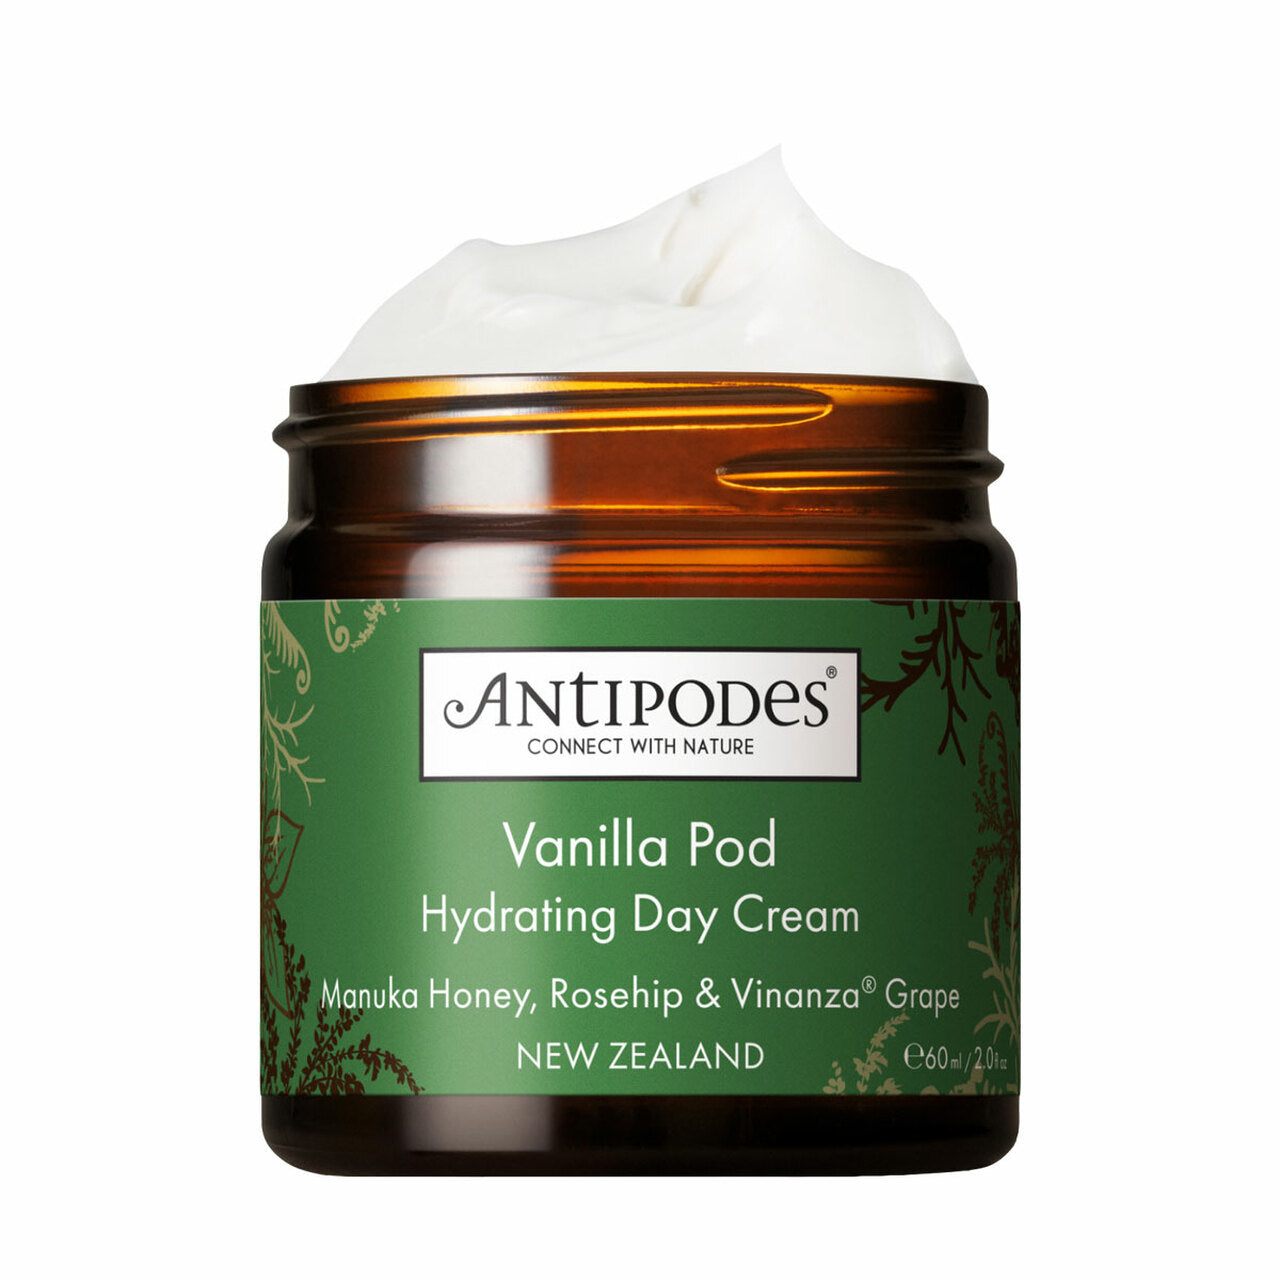 Antipodes Vanilla Pod Hydrating Day Cream 60ml.